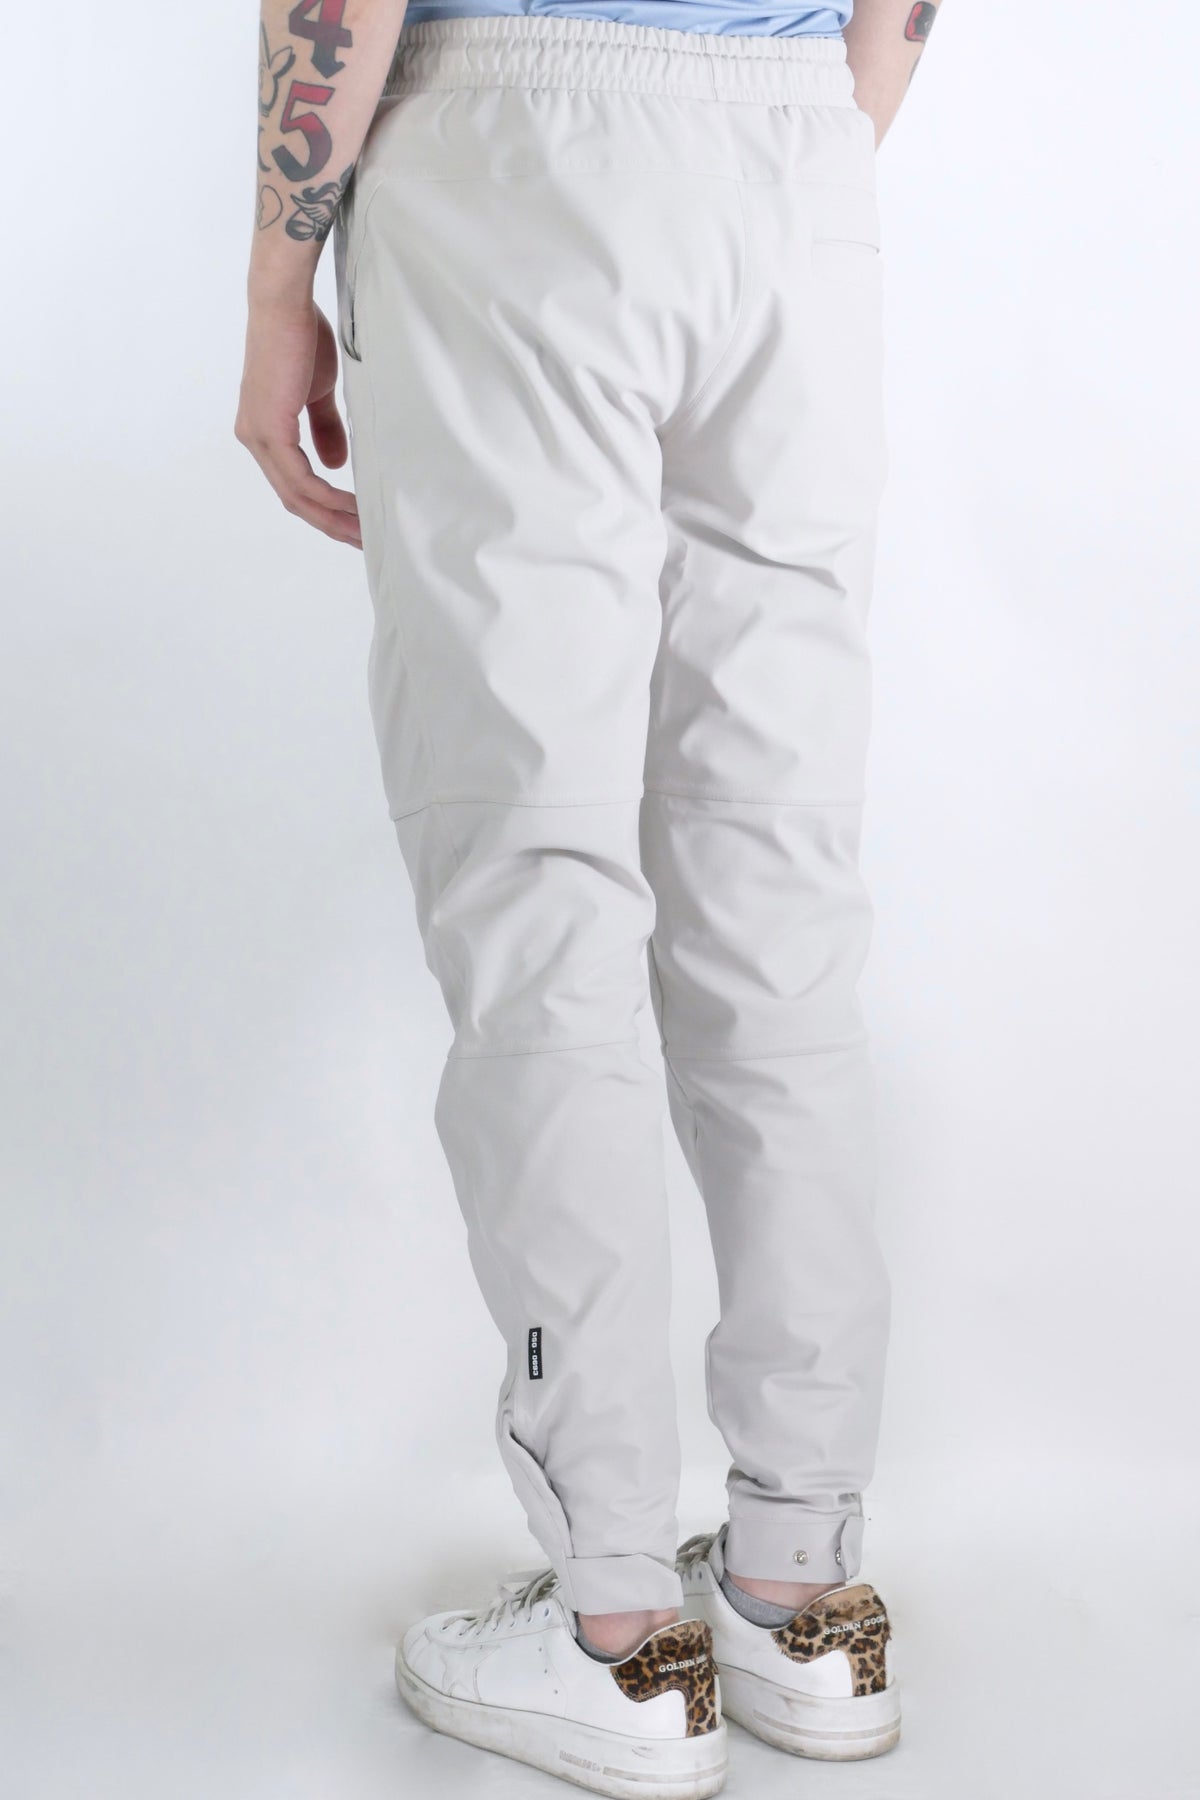 ASRV Kinterra™ Weatherproof Snap Pants - Grey